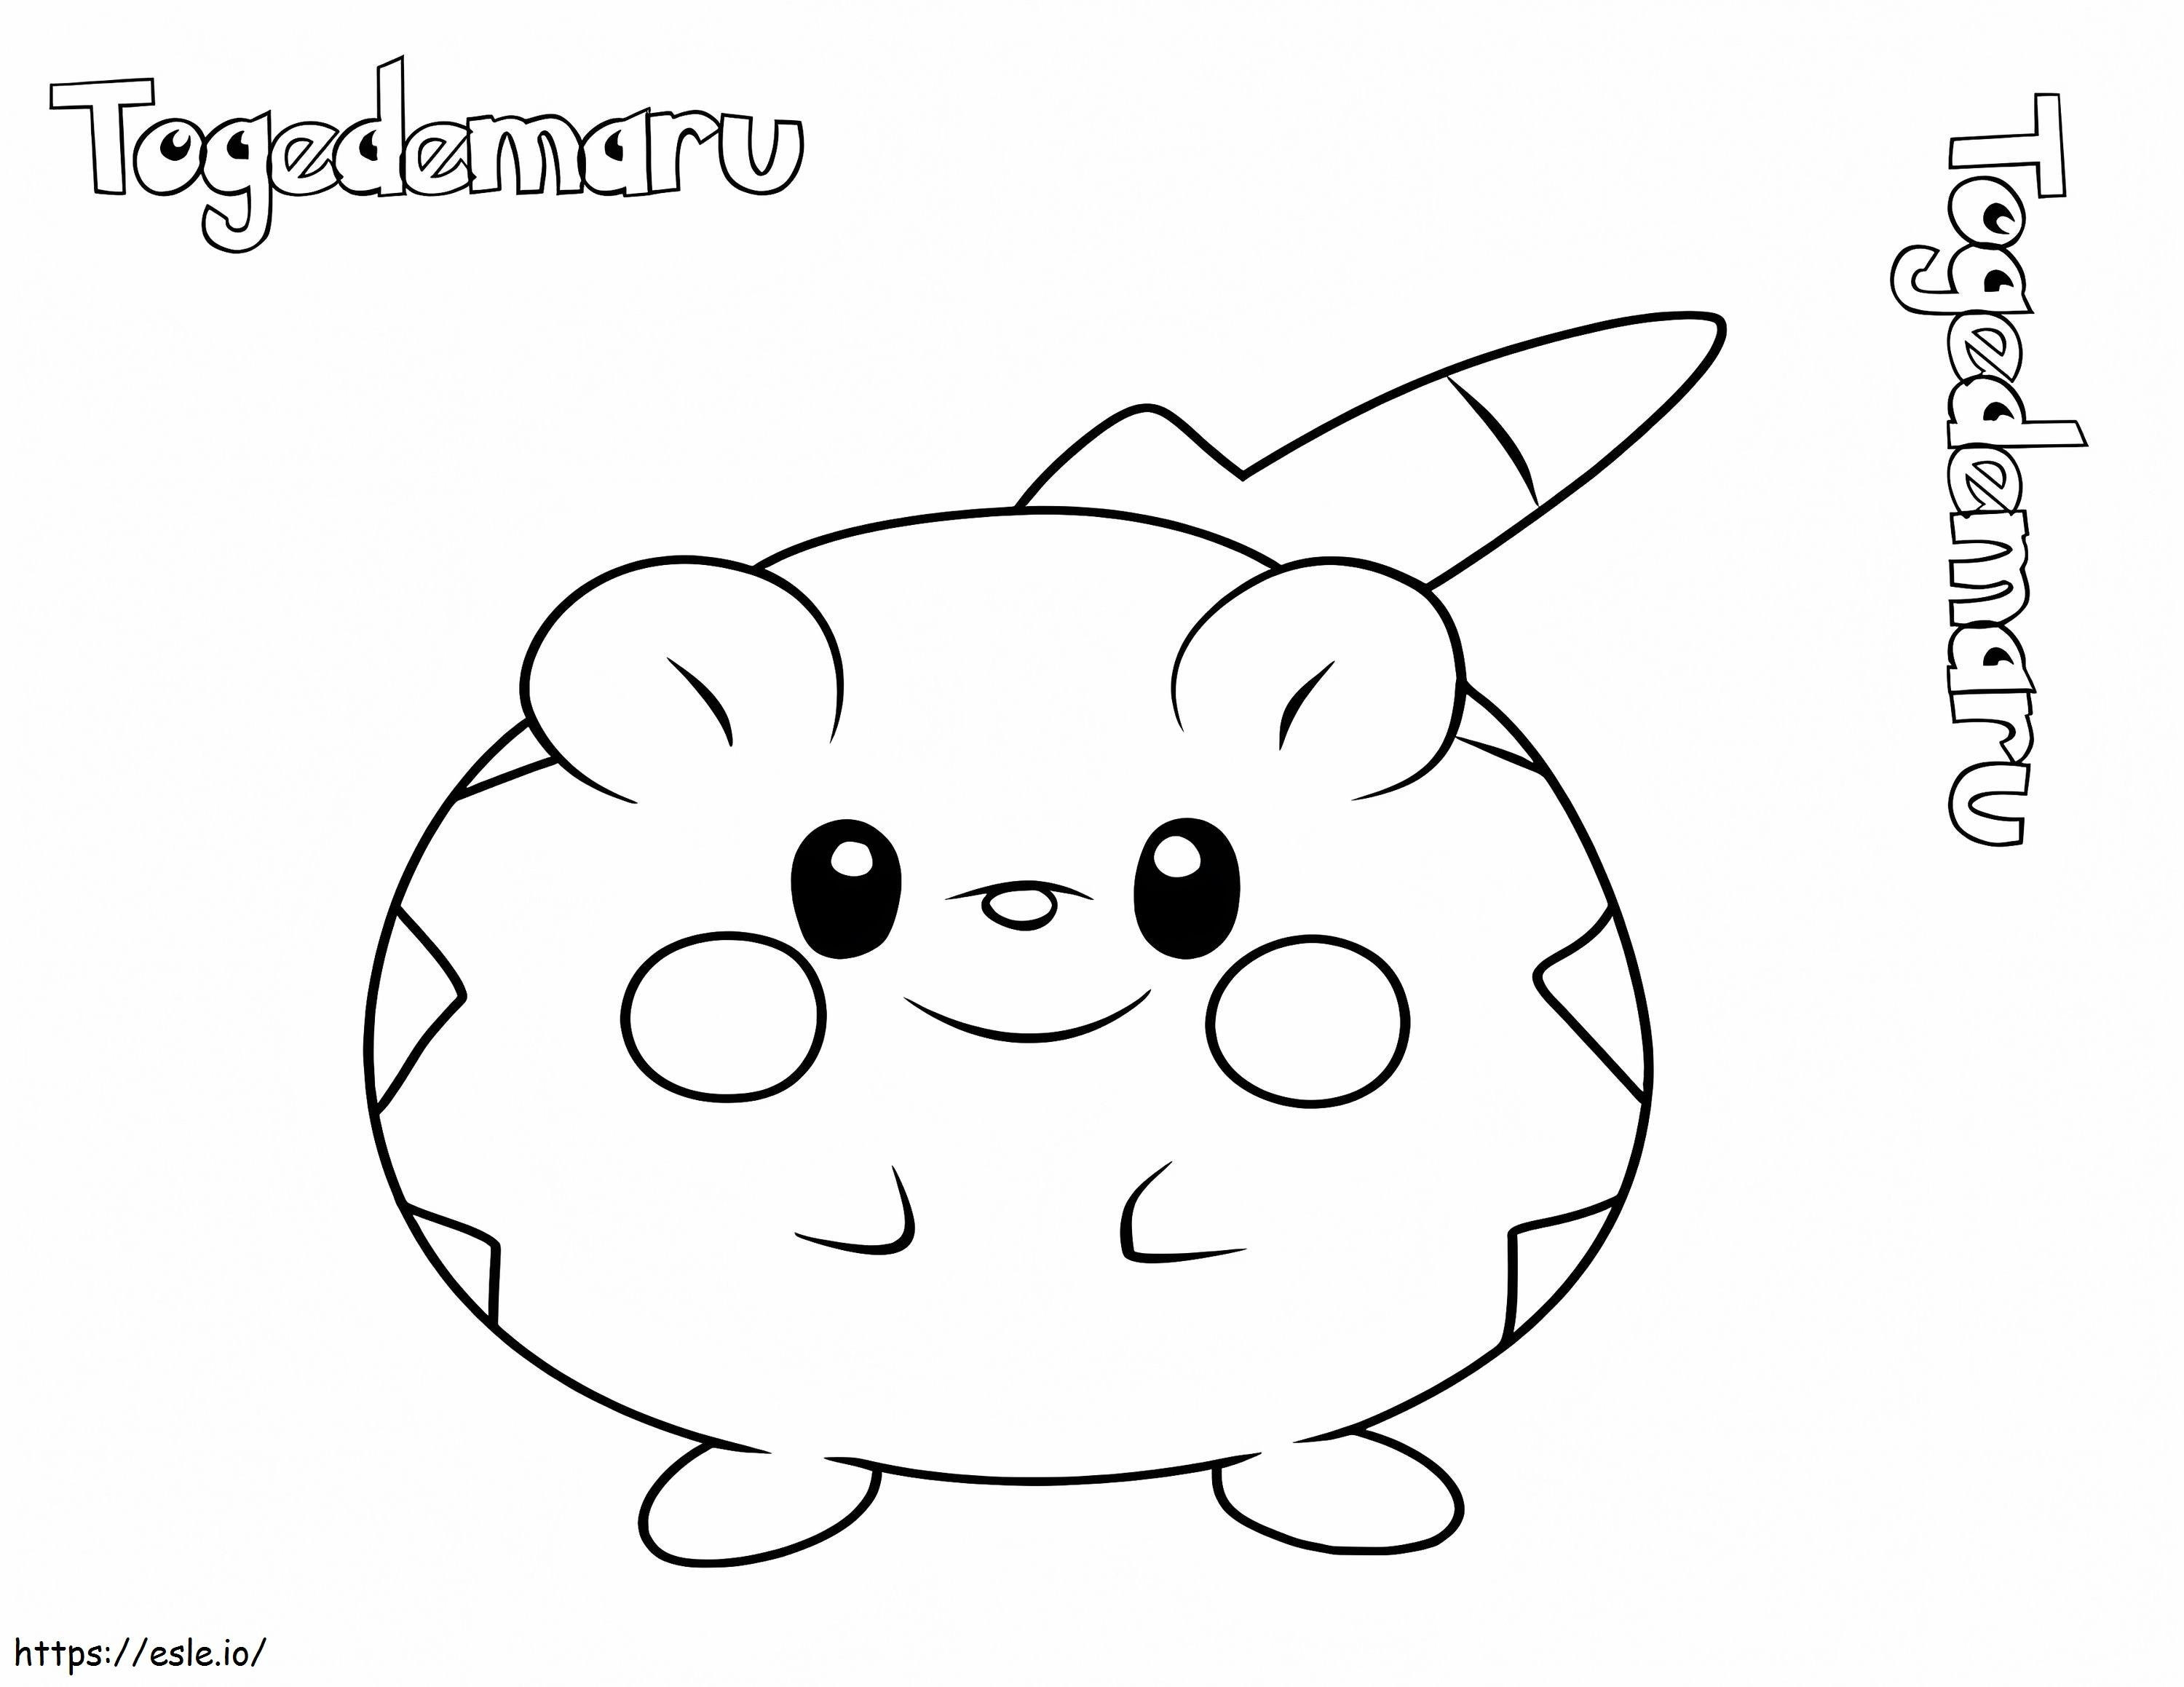 Coloriage Togedemaru Pokémon 2 à imprimer dessin